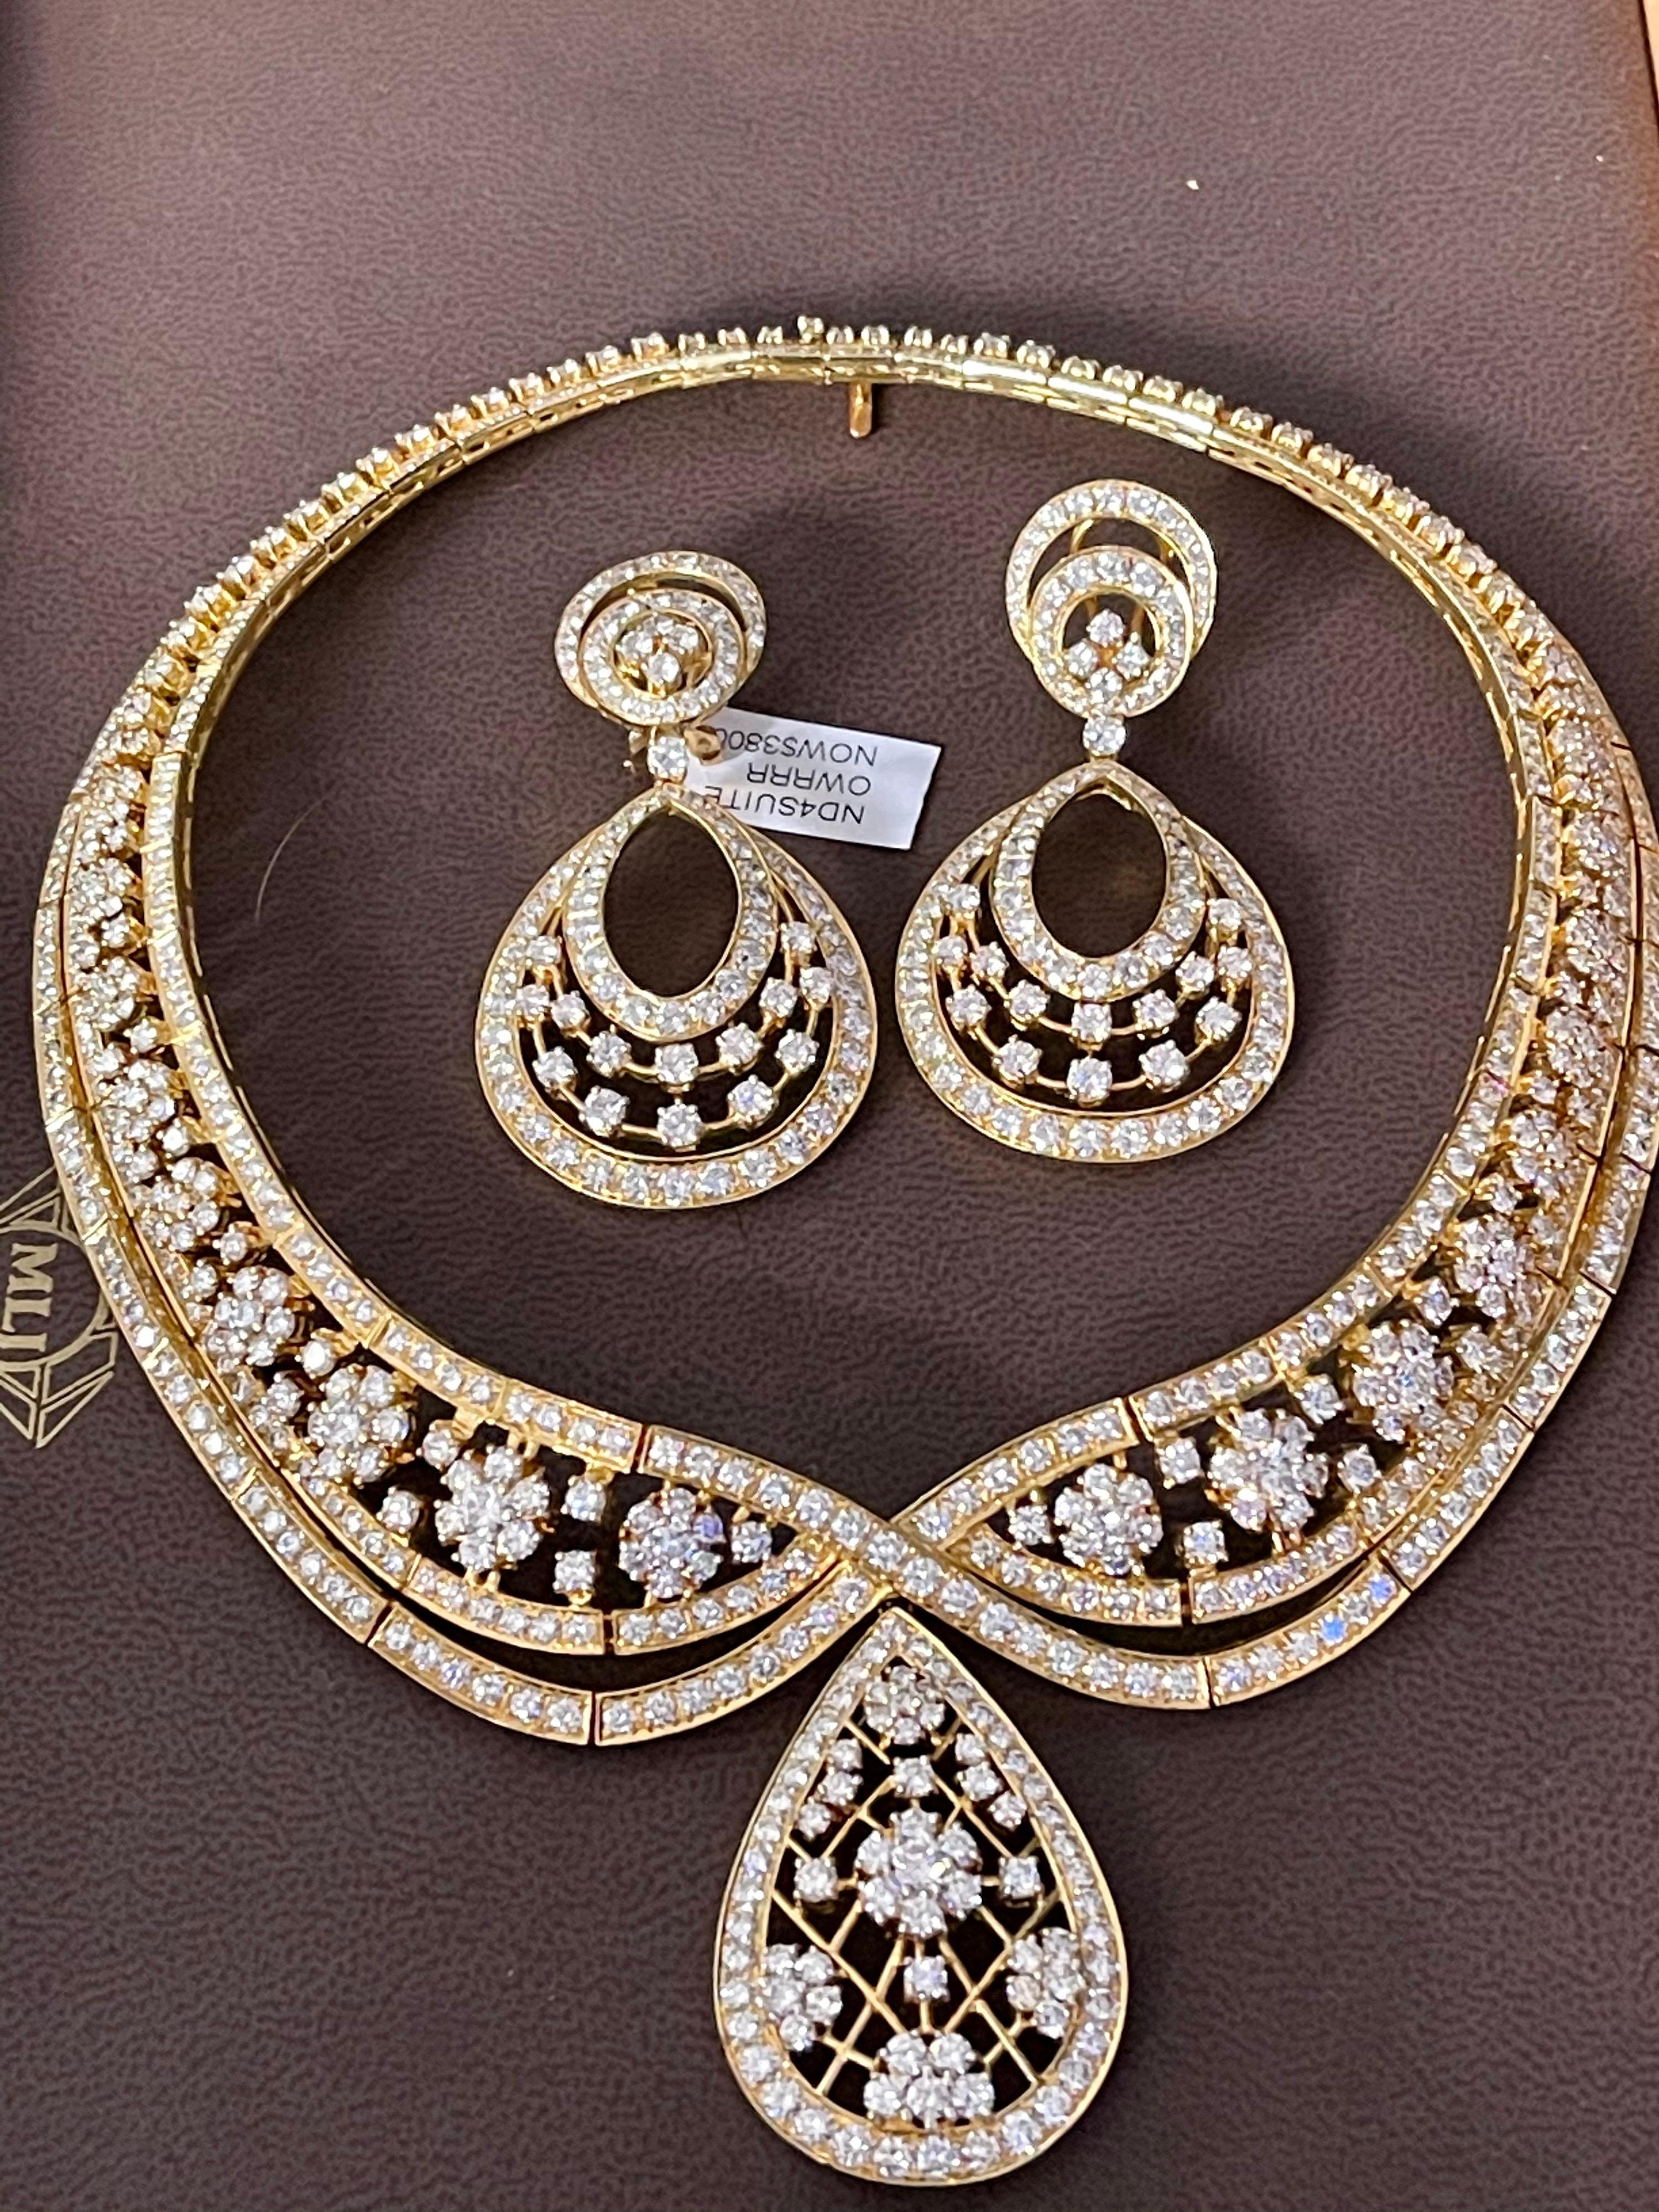 37 Carat Diamond Necklace and Earrings 185 Grams 18 Karat Gold Bridal Suite 8